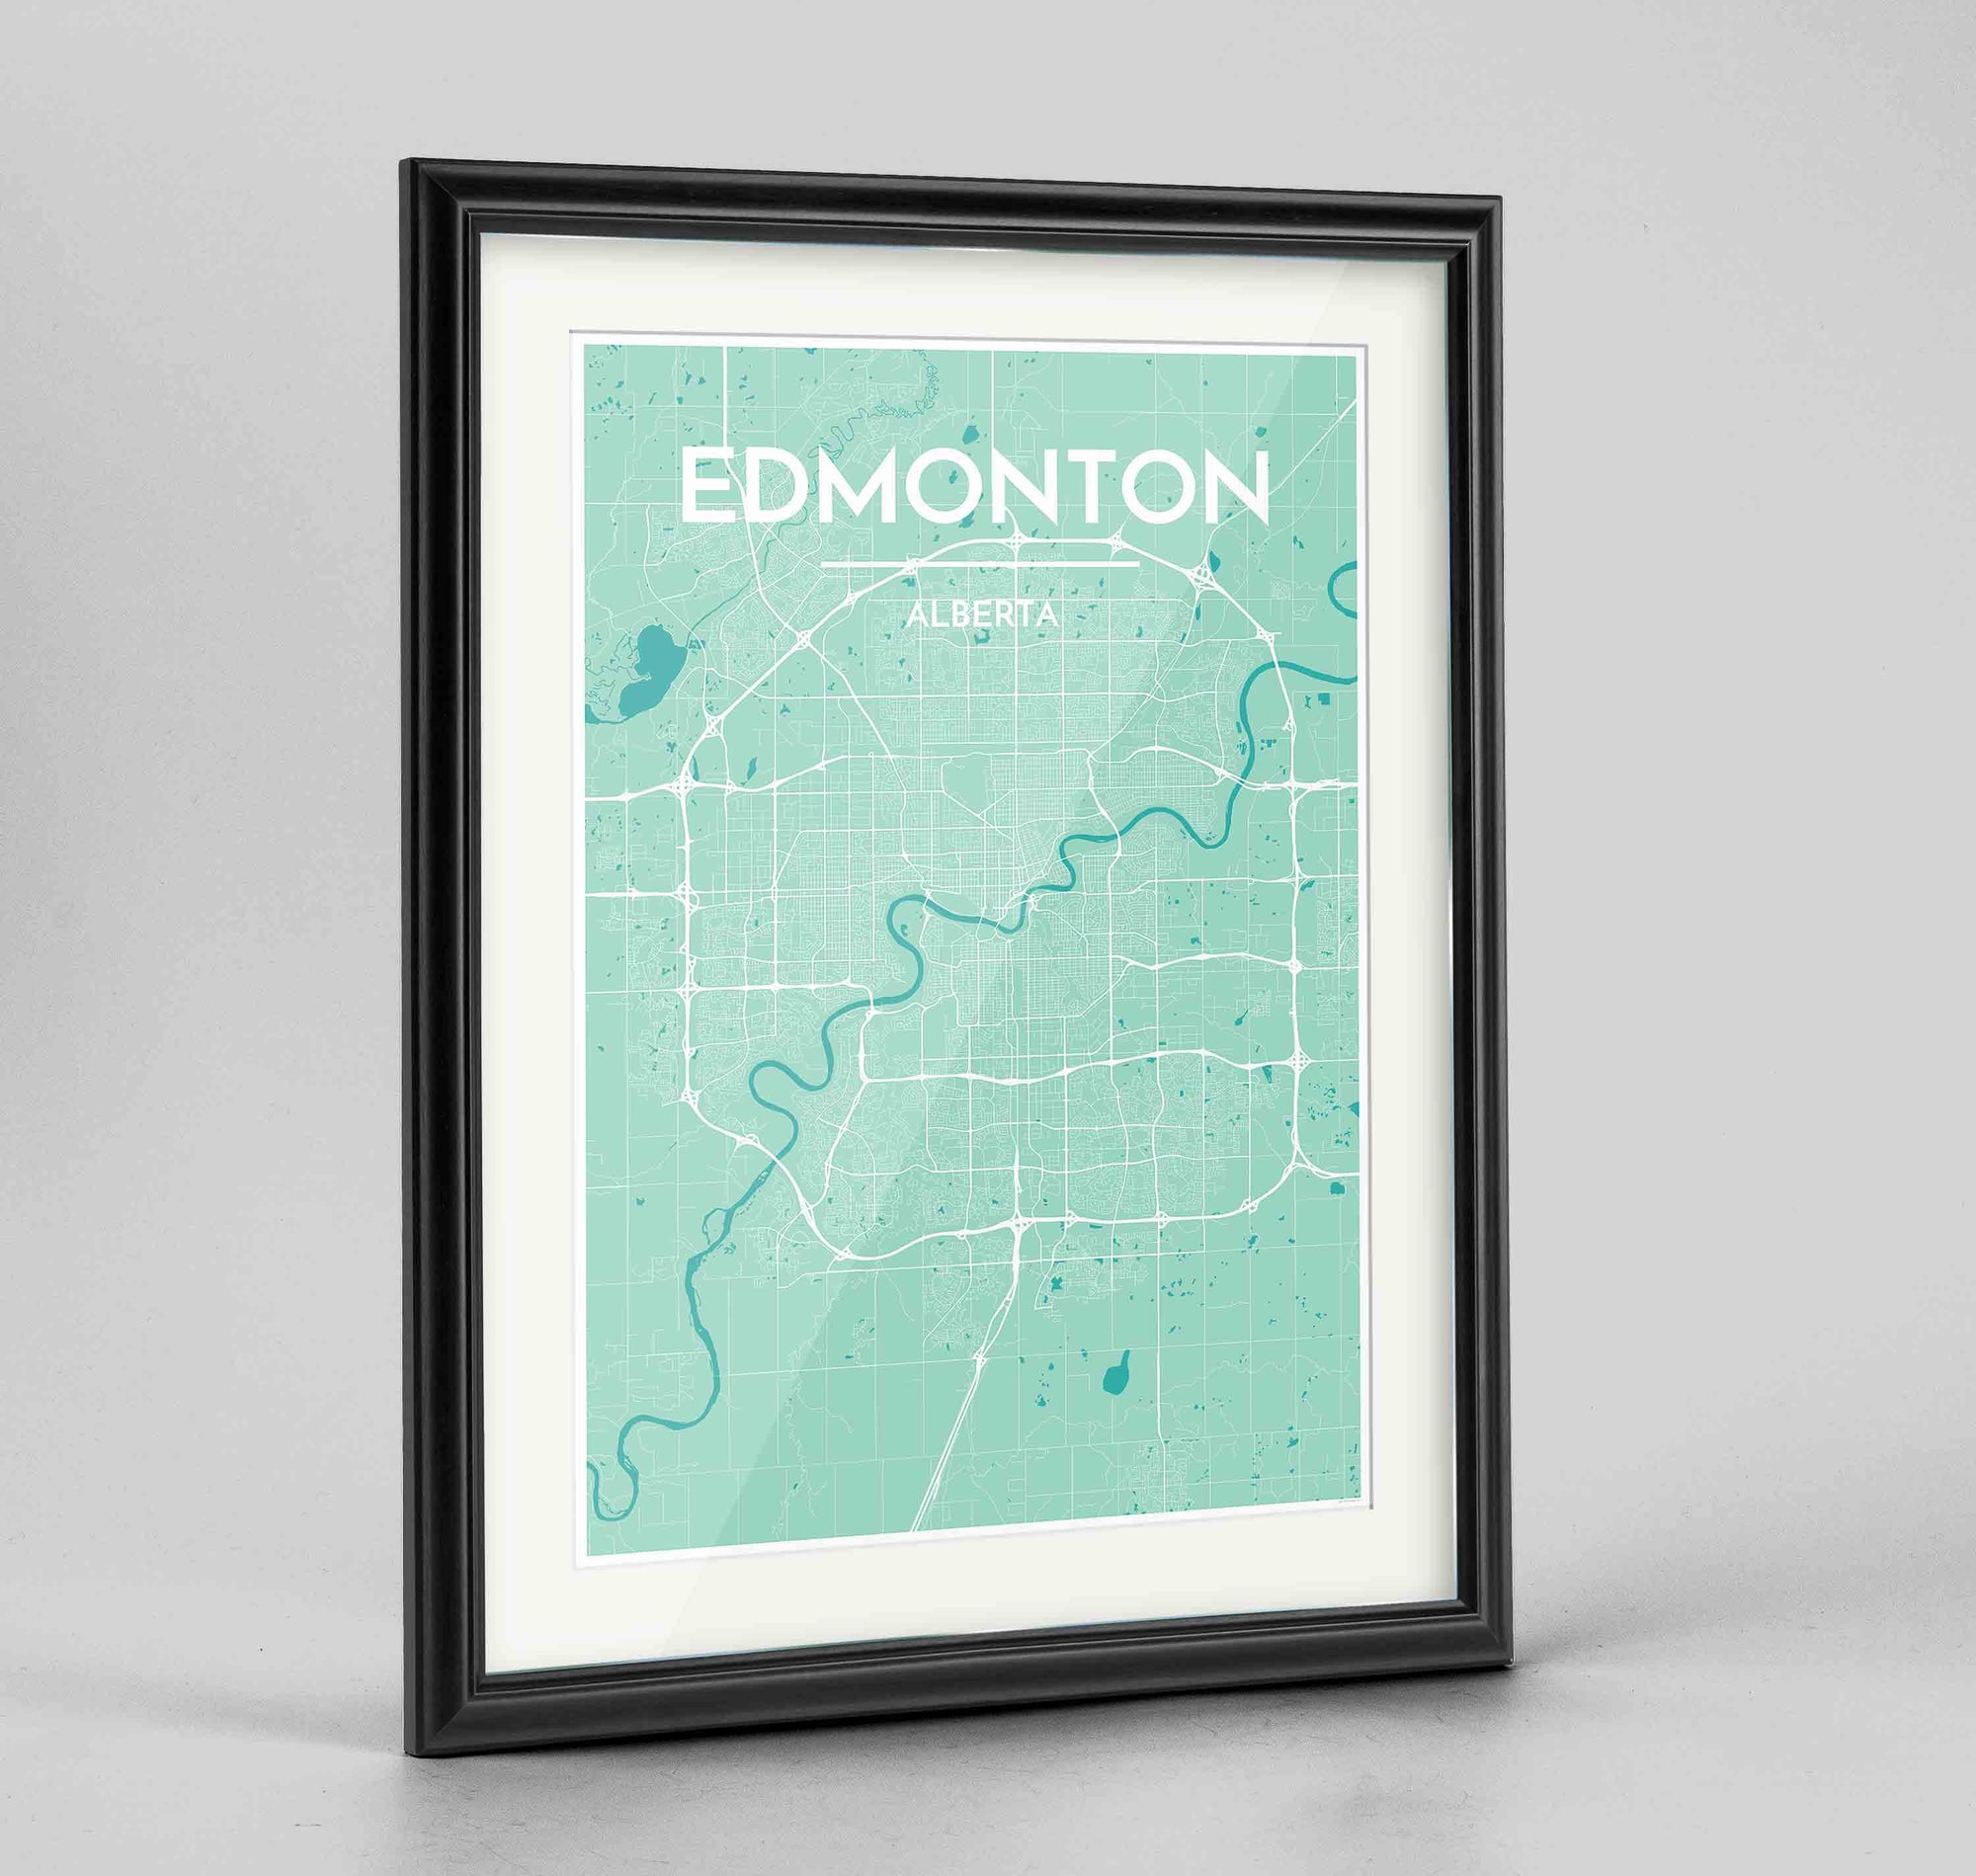 Framed Edmonton City Map 24x36" Traditional Black frame Point Two Design Group